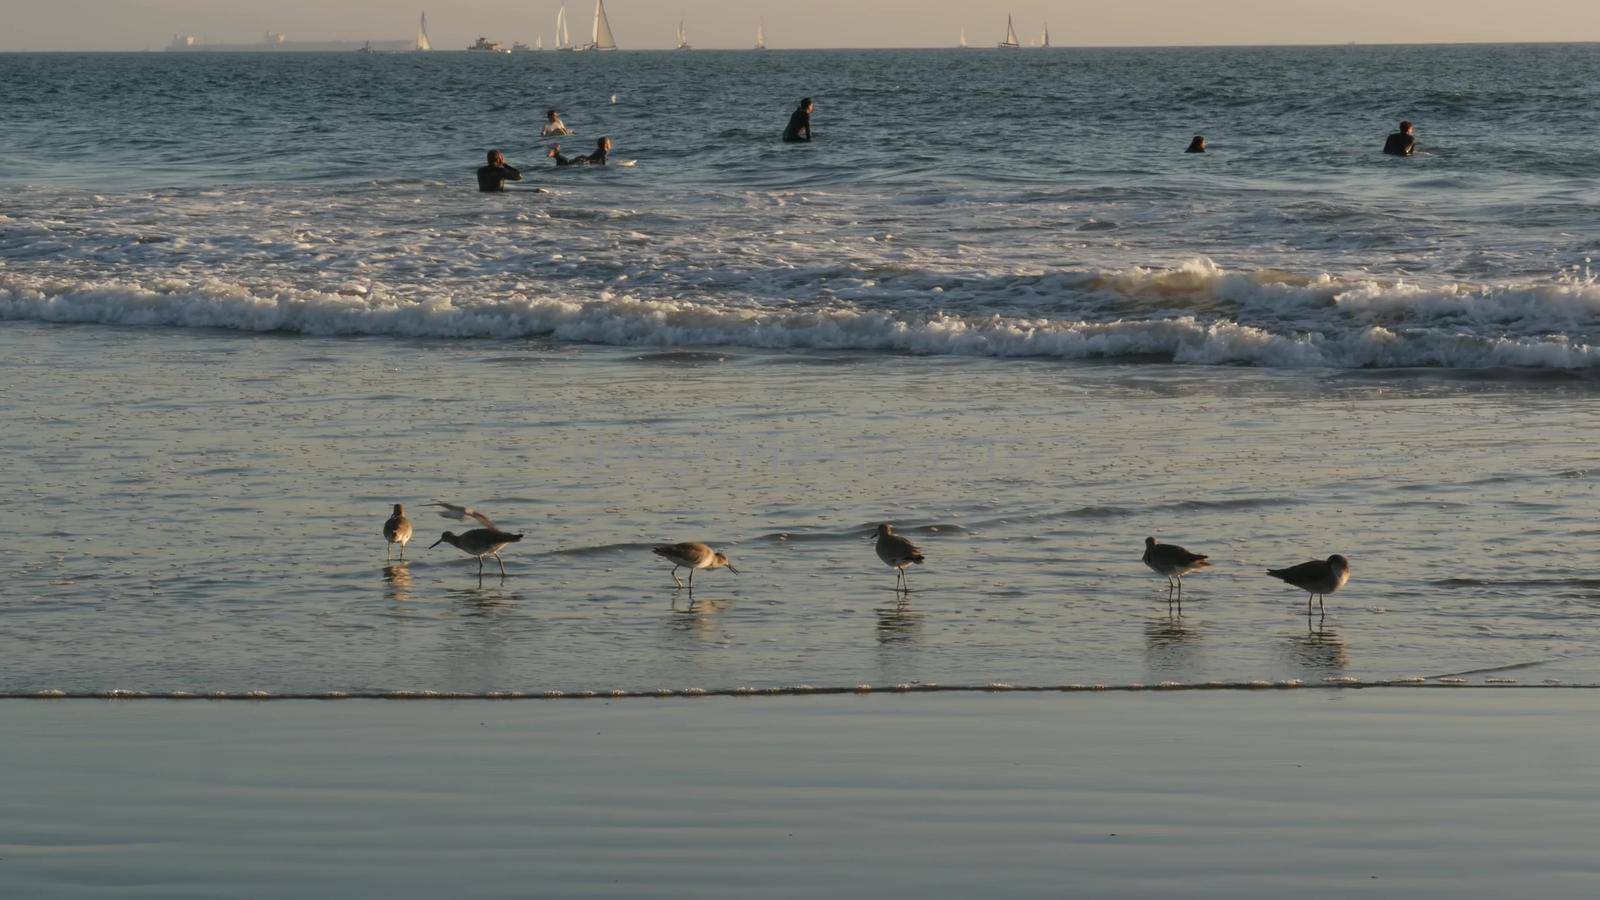 LOS ANGELES CA USA - 16 NOV 2019: California summertime Venice beach aesthetic. Sea gull near splashing waves of pasific ocean tide. Many surfers waiting in water. Birds in golden unset light by DogoraSun